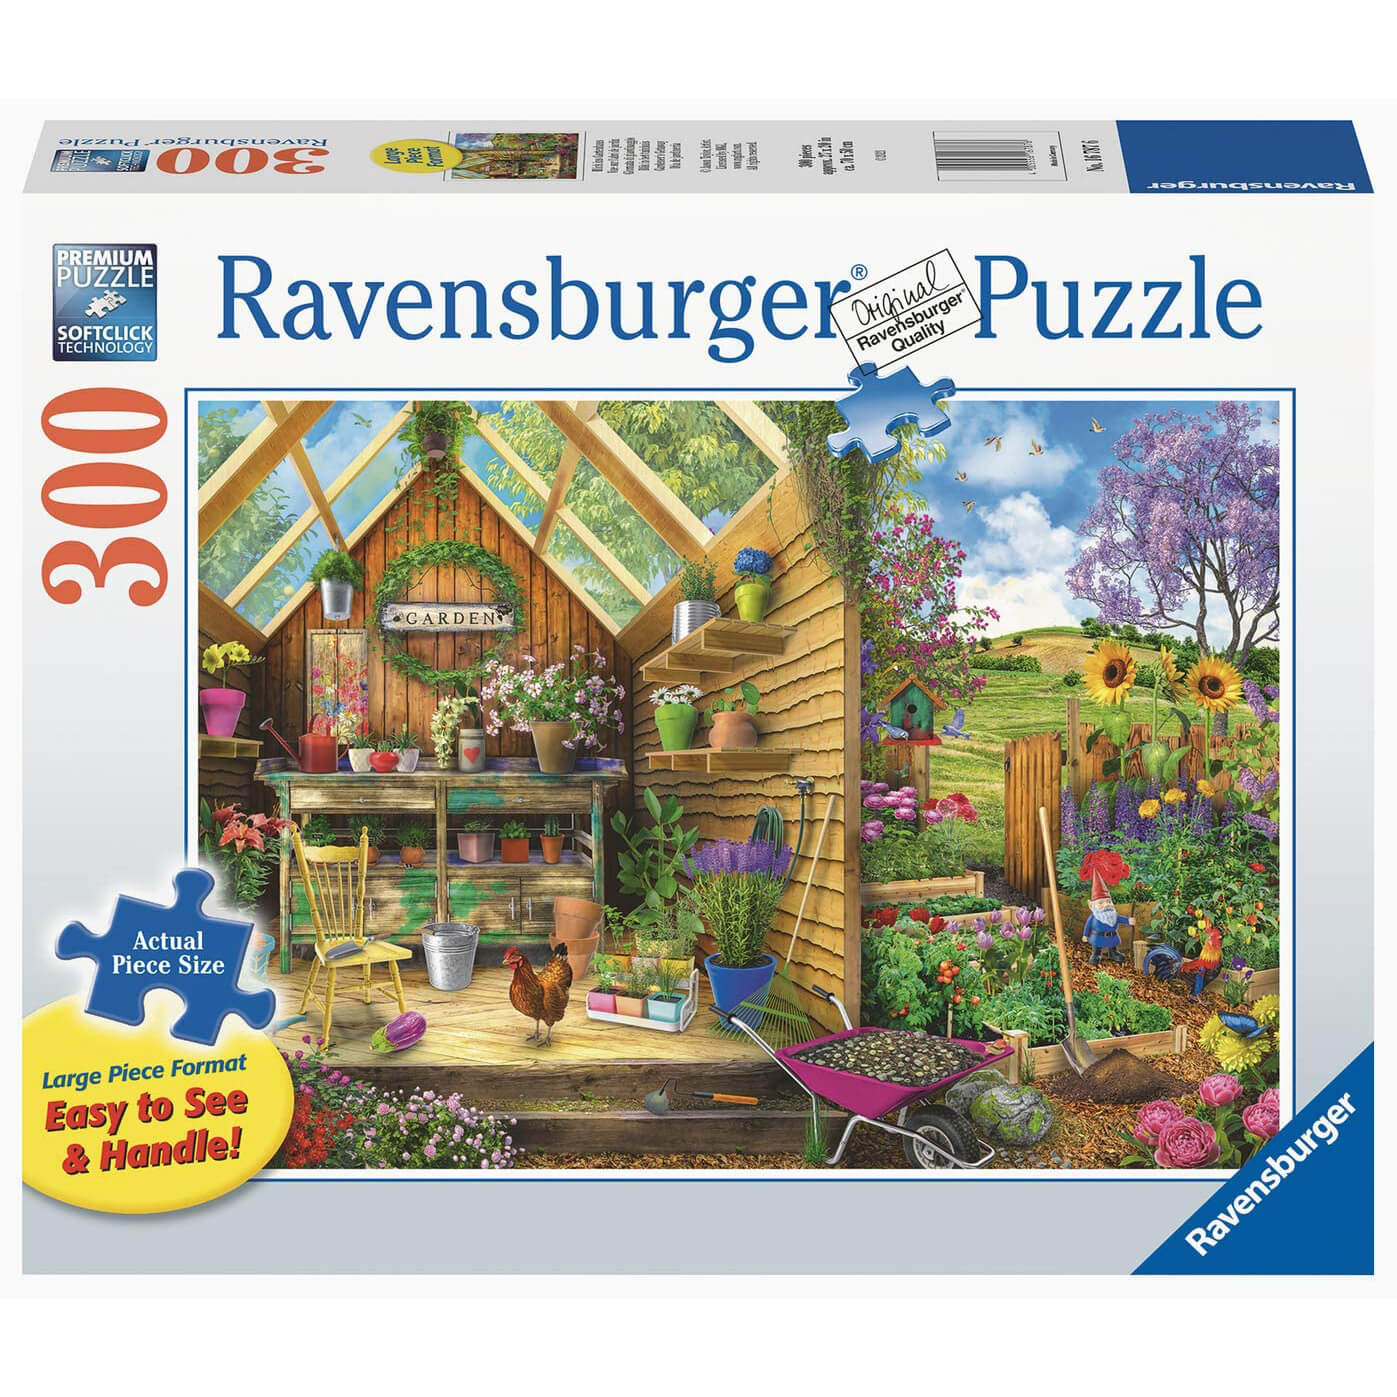 Ravensburger Gardener's Getaway 300 Piece Large Format Puzzle